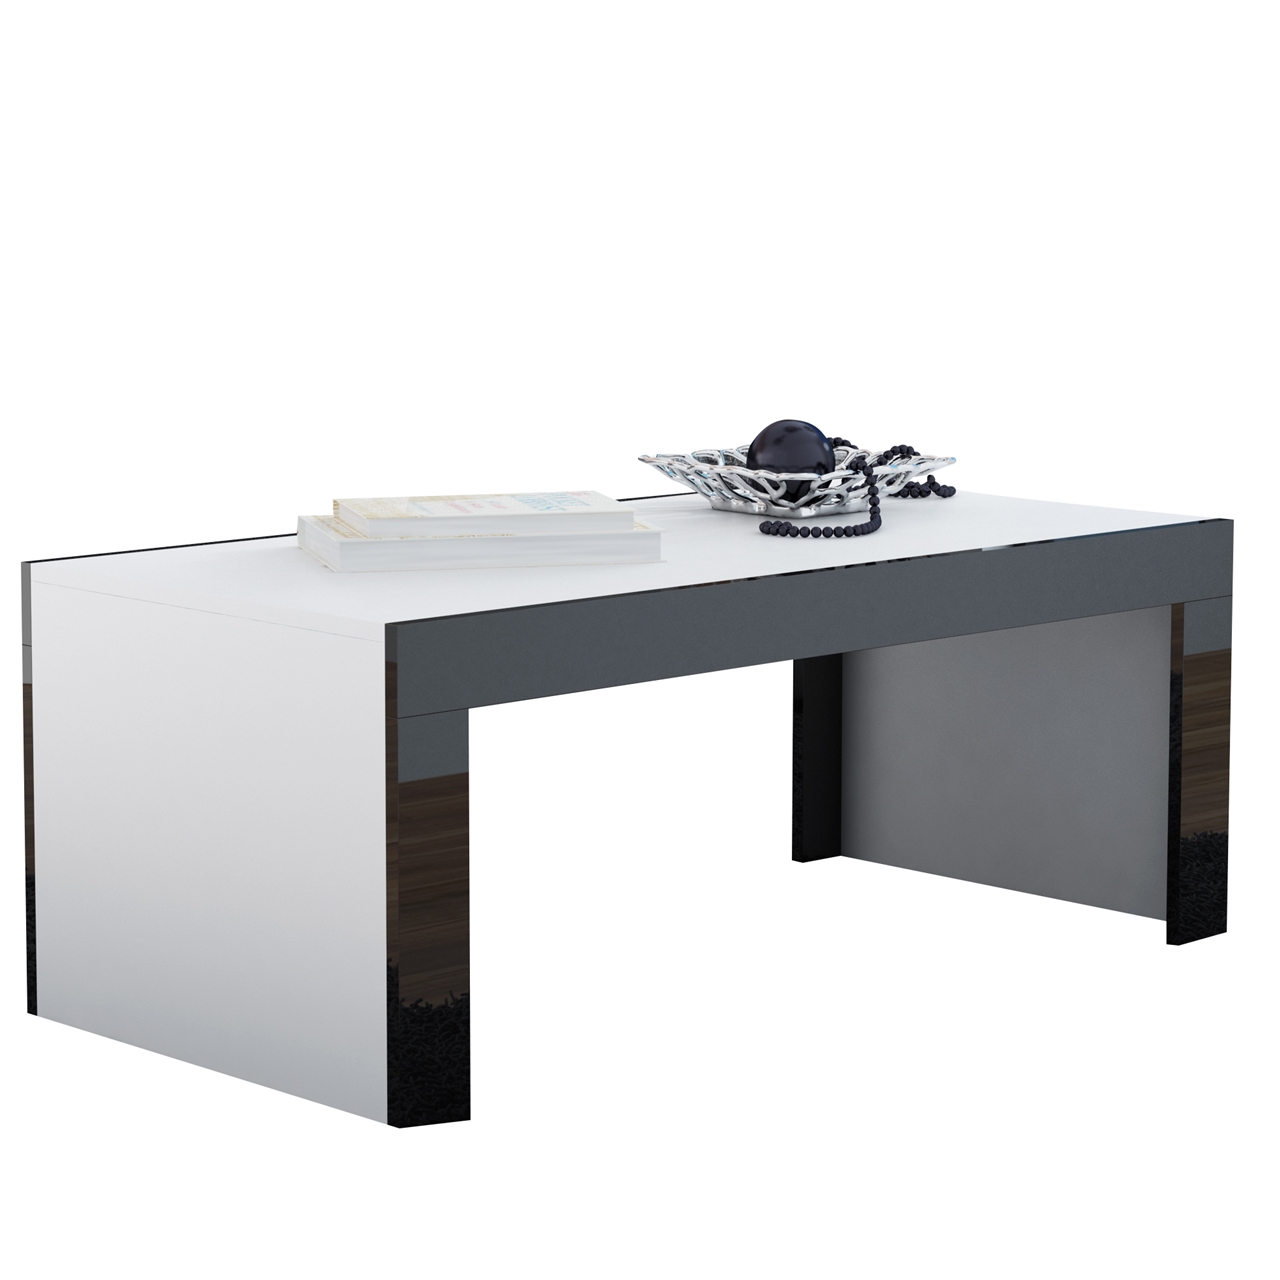 Coffee table TESS 120 white / black gloss